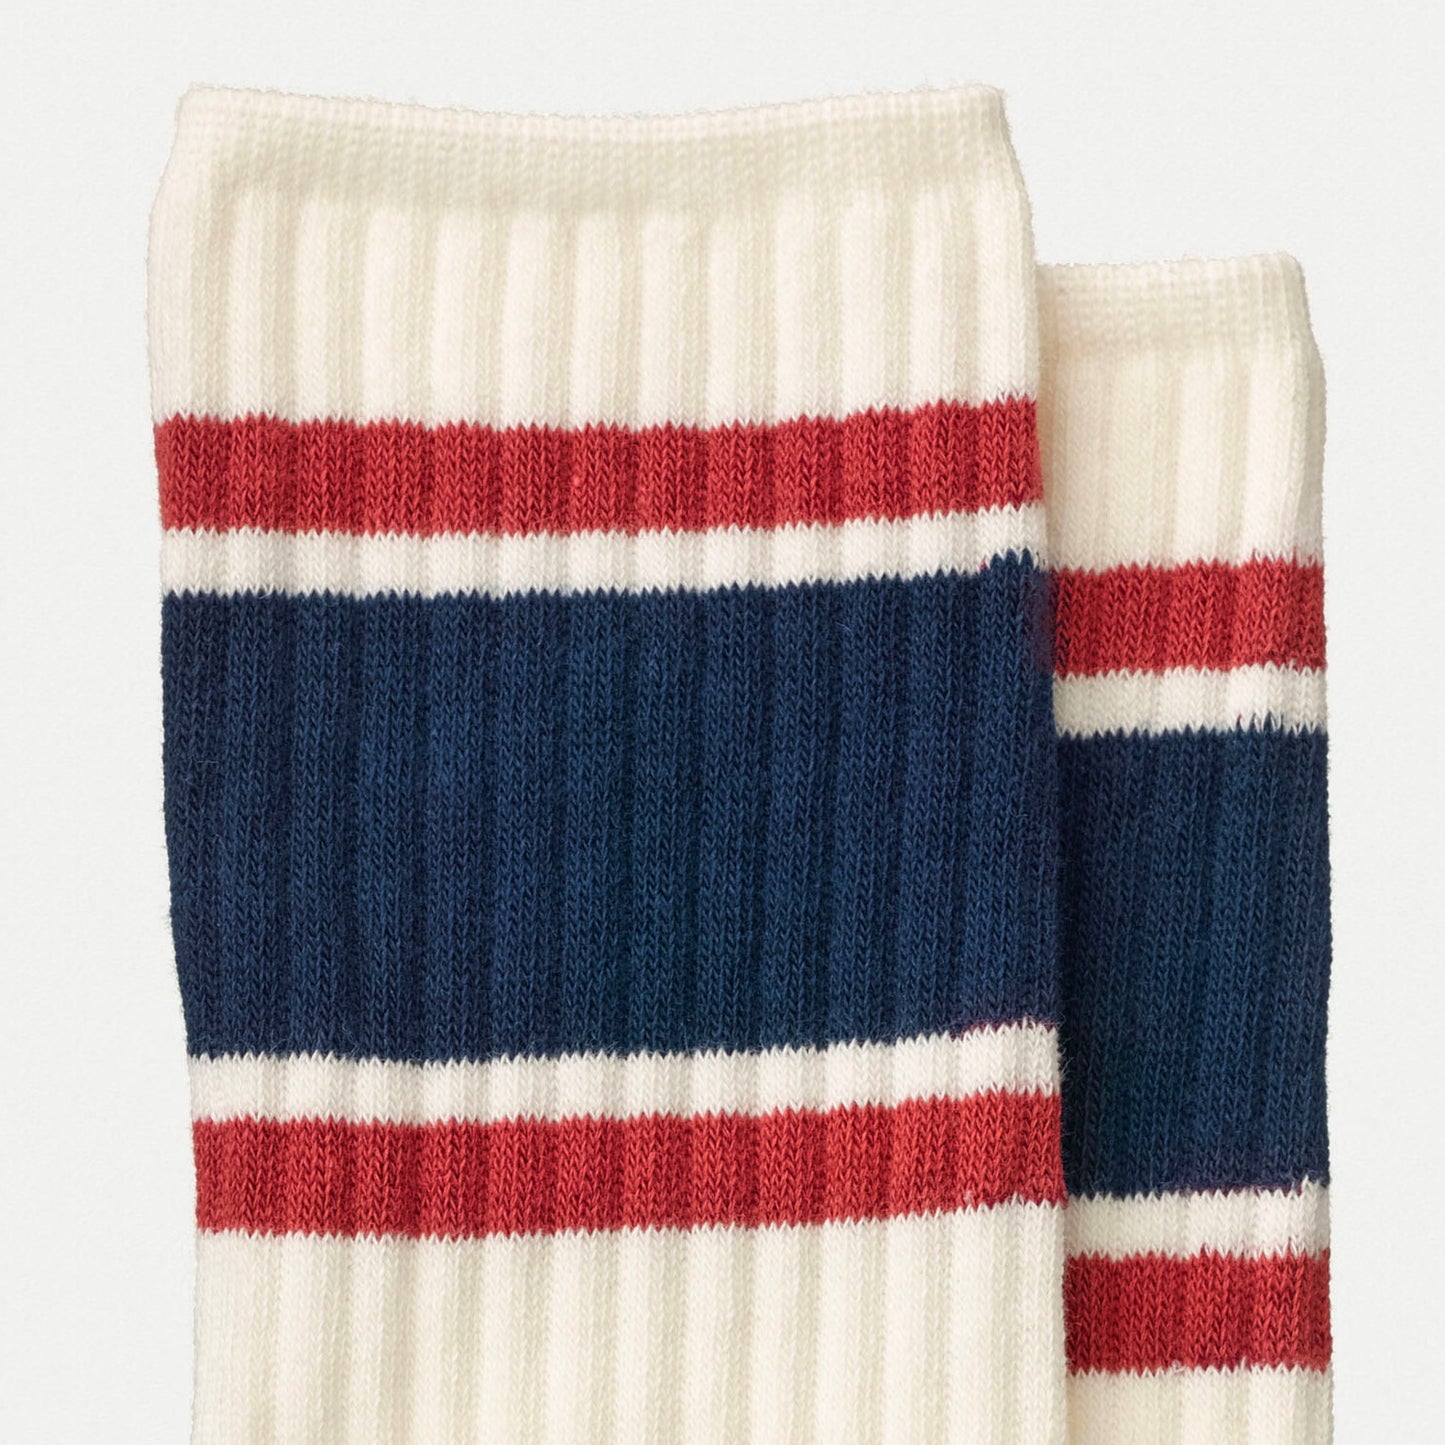 Nudie - Amundsson Sport Socks - Off White / Navy / Red